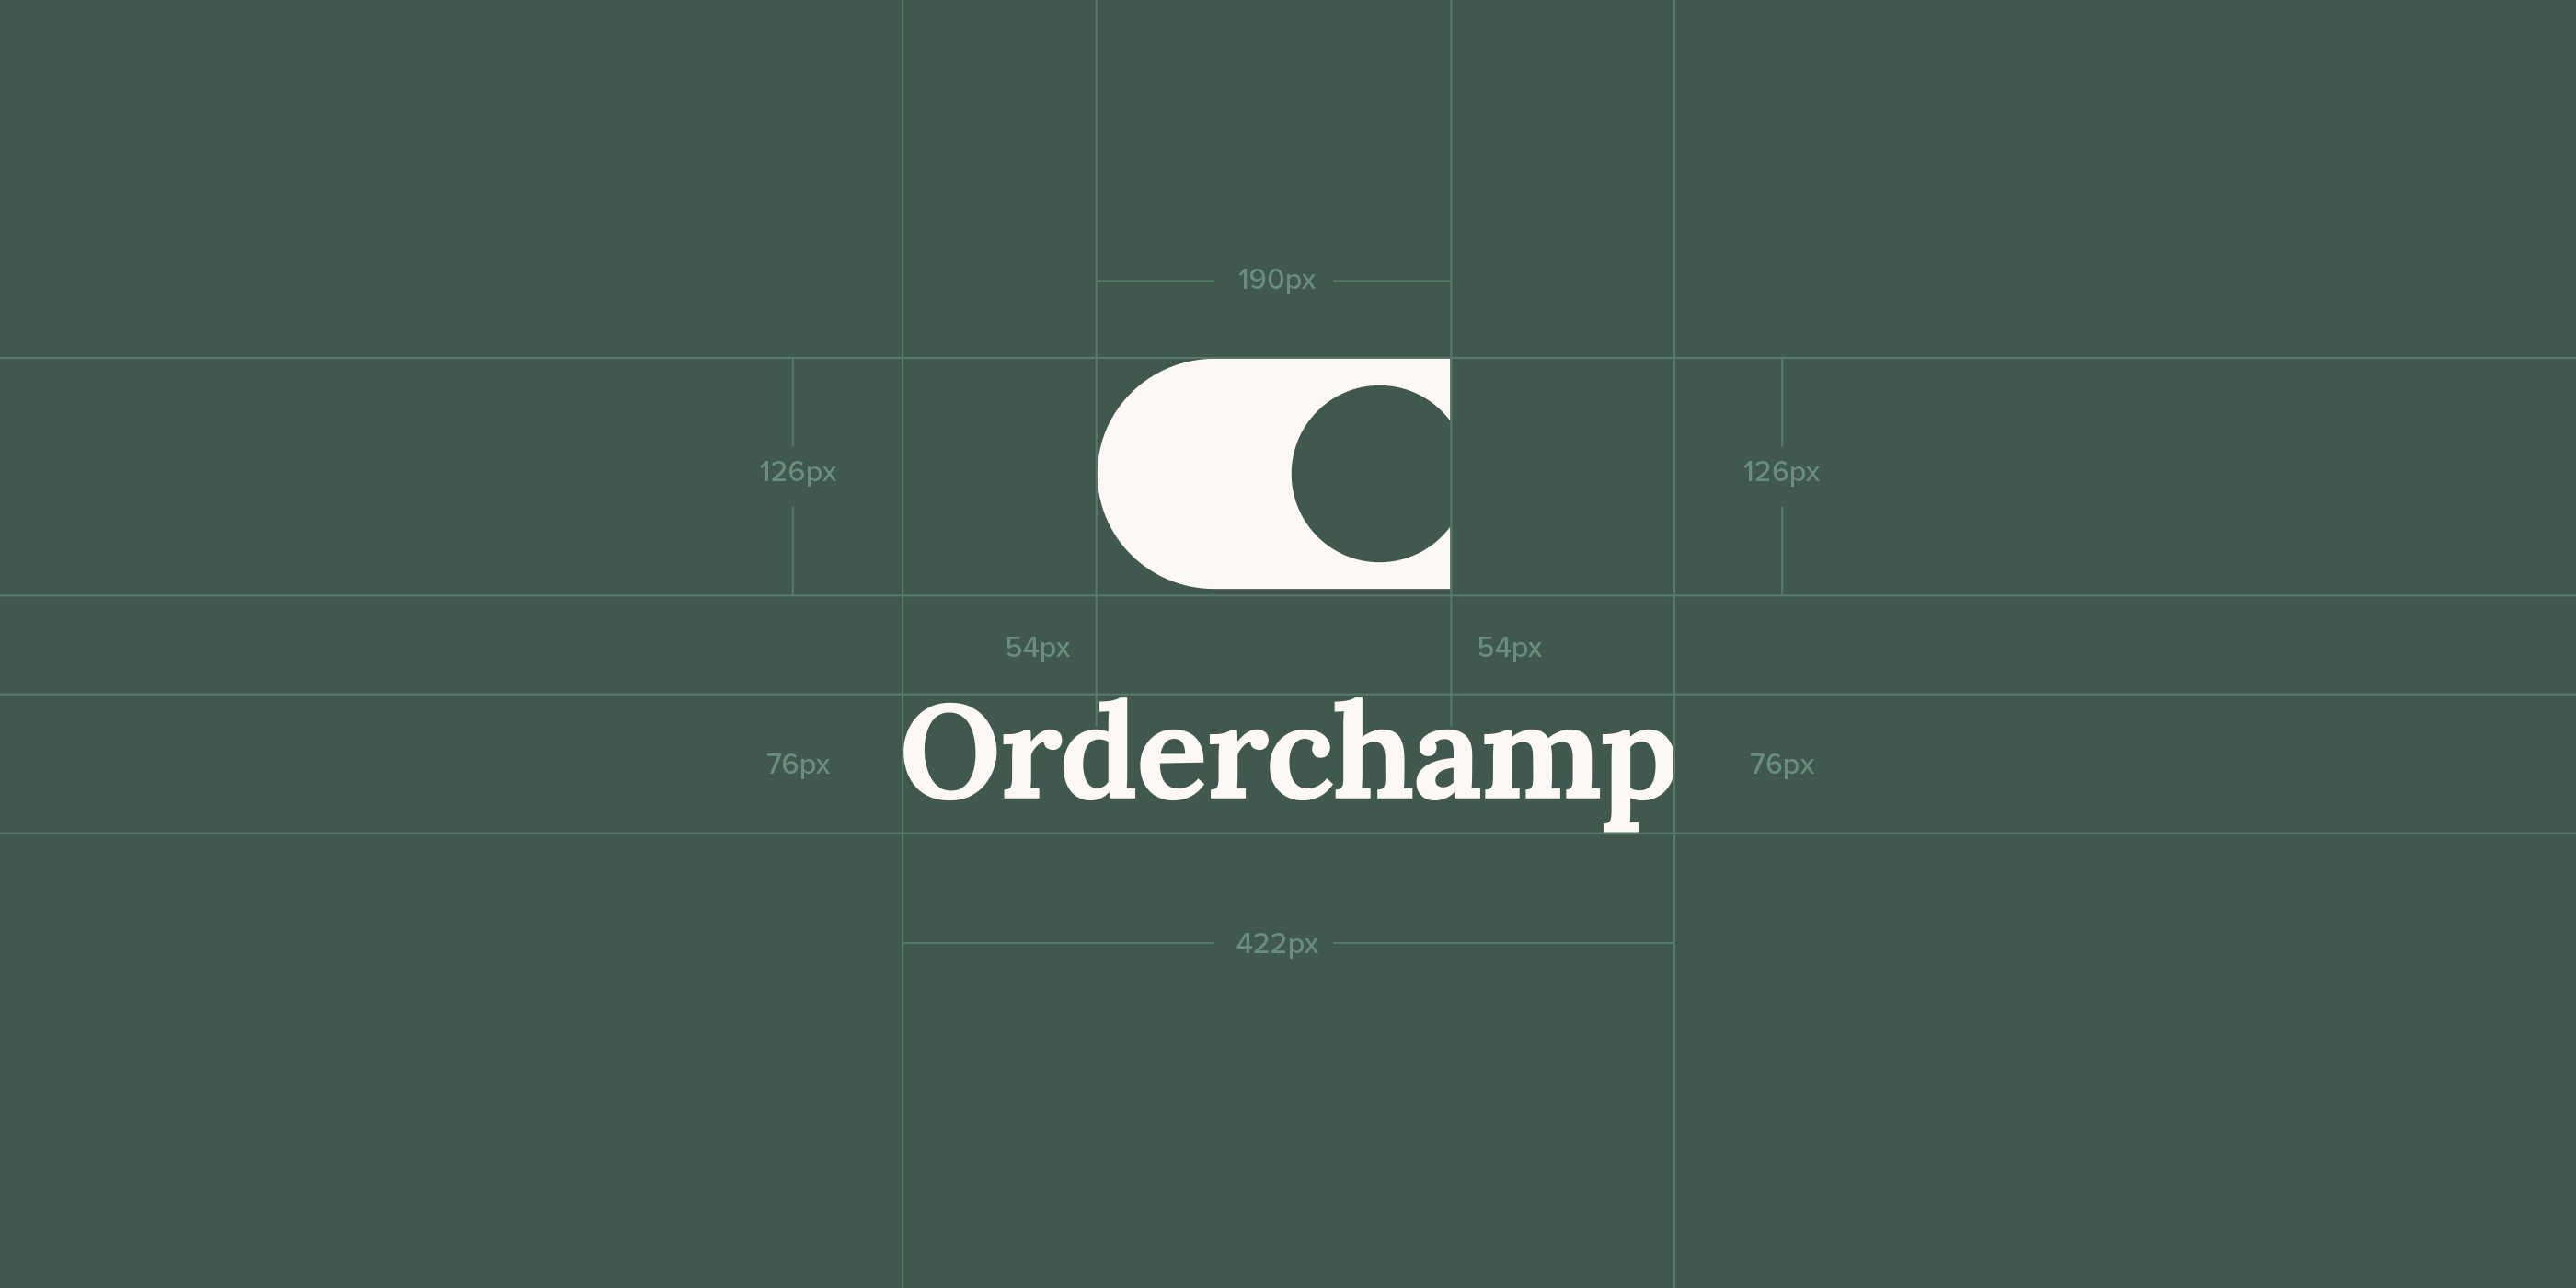 Orderchamp